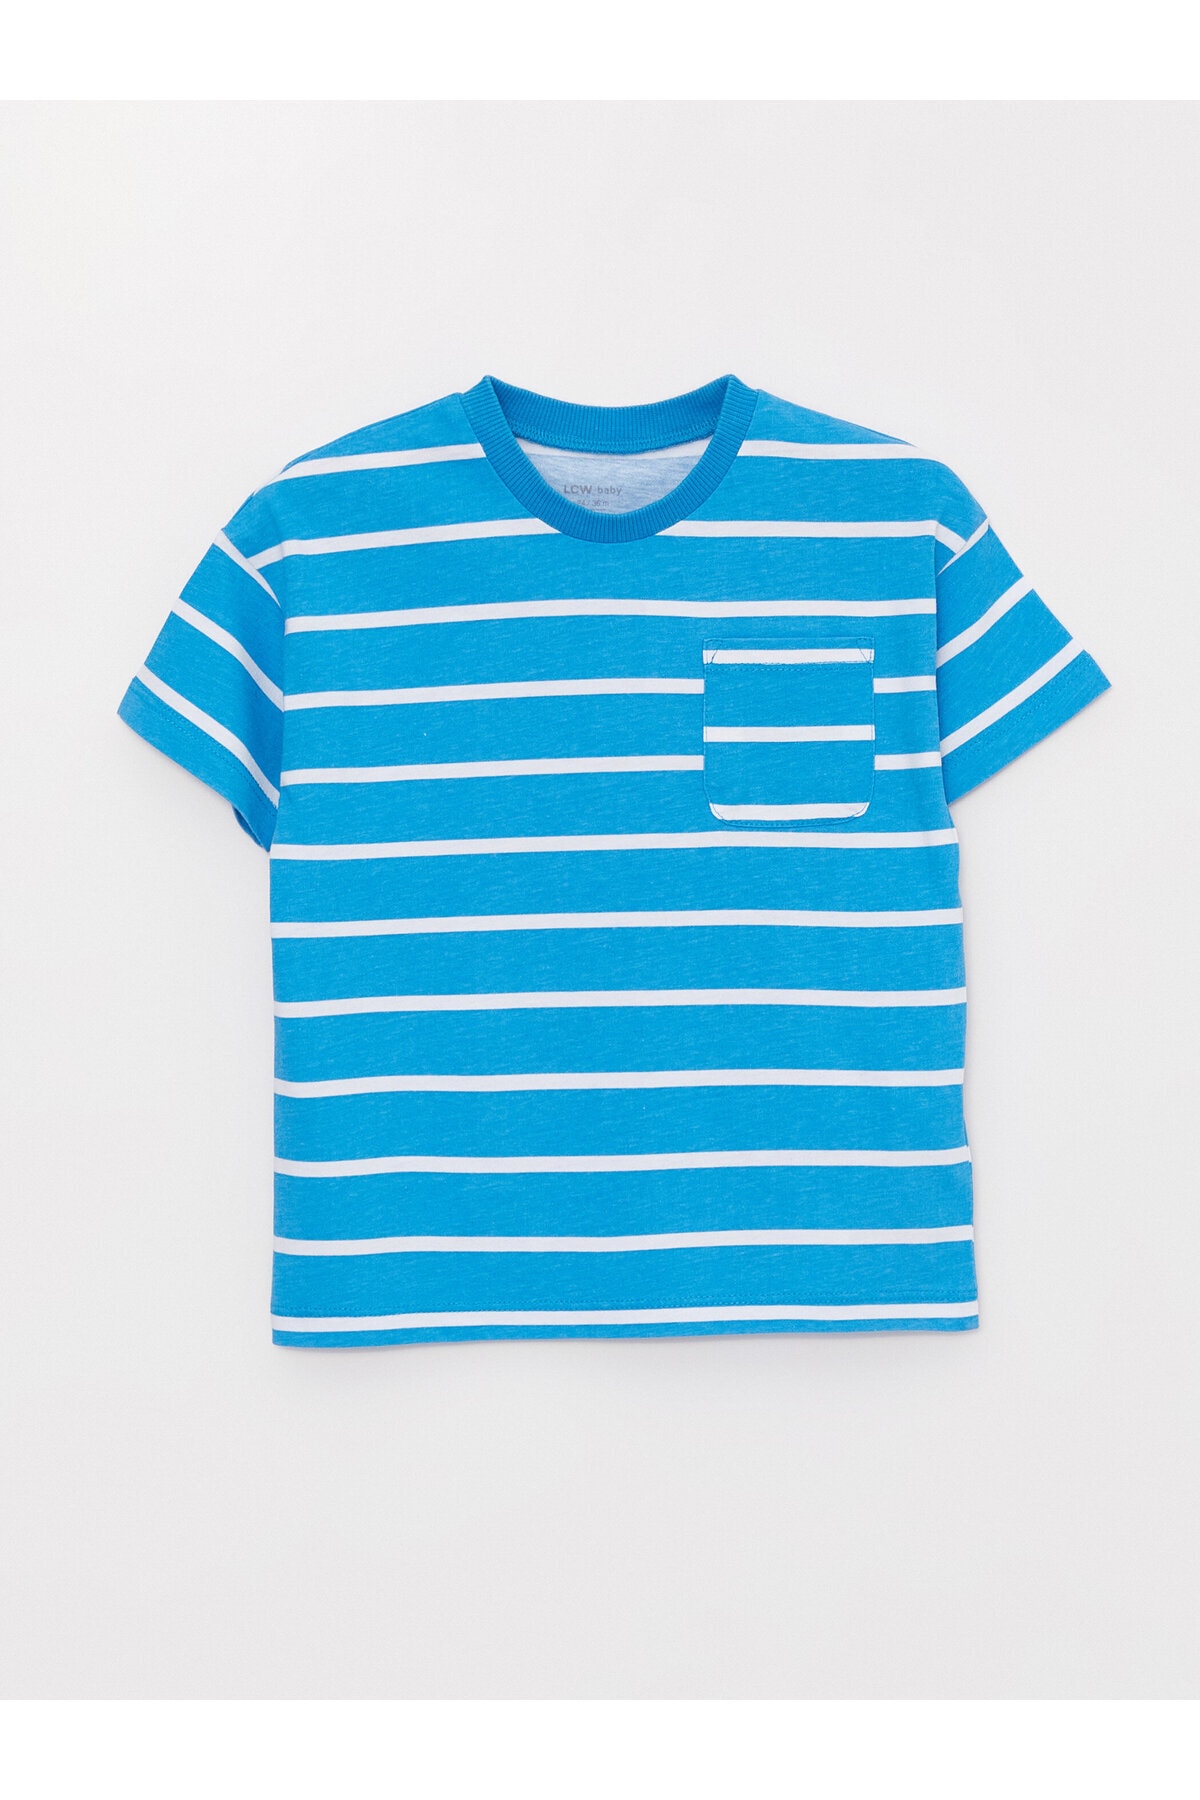 LC Waikiki Crew Neck Short Sleeve Striped Baby Boy T-Shirt